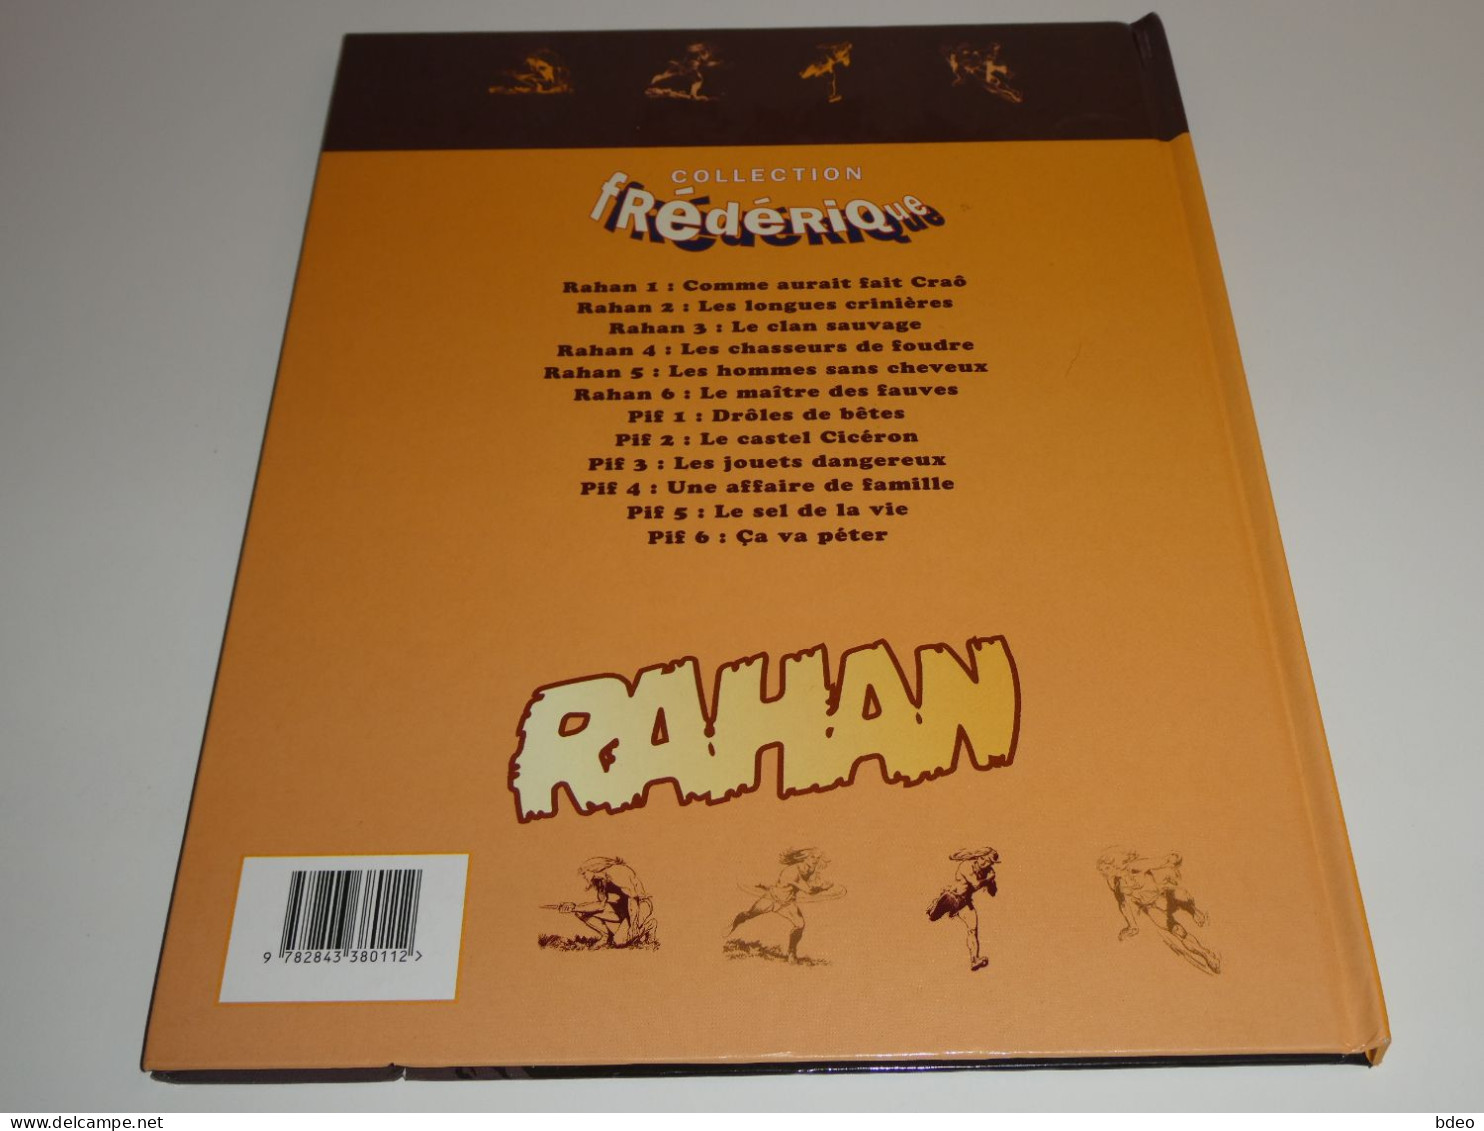 RAHAN LA COLLECTION FREDERIQUE TOME 6 / BE - Edizioni Originali (francese)